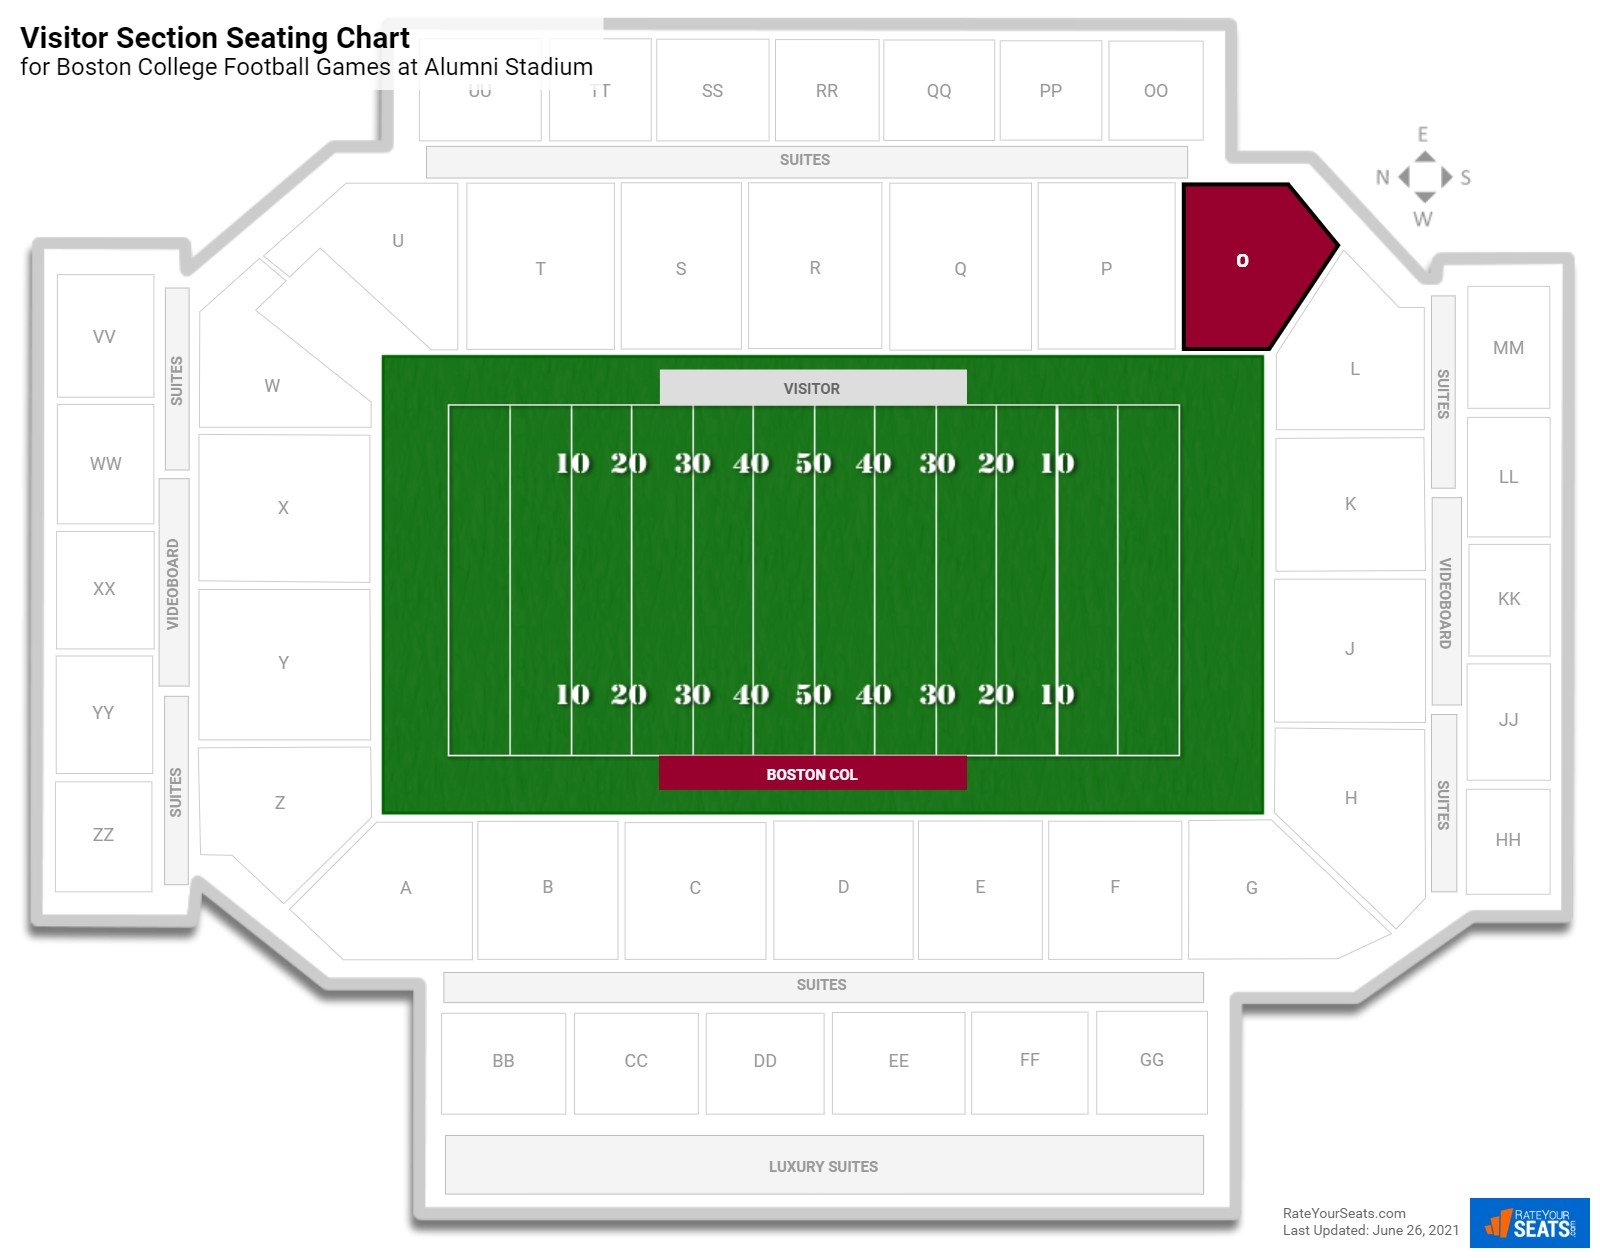 Boston College Visitor Section Seating Chart at Alumni Stadium